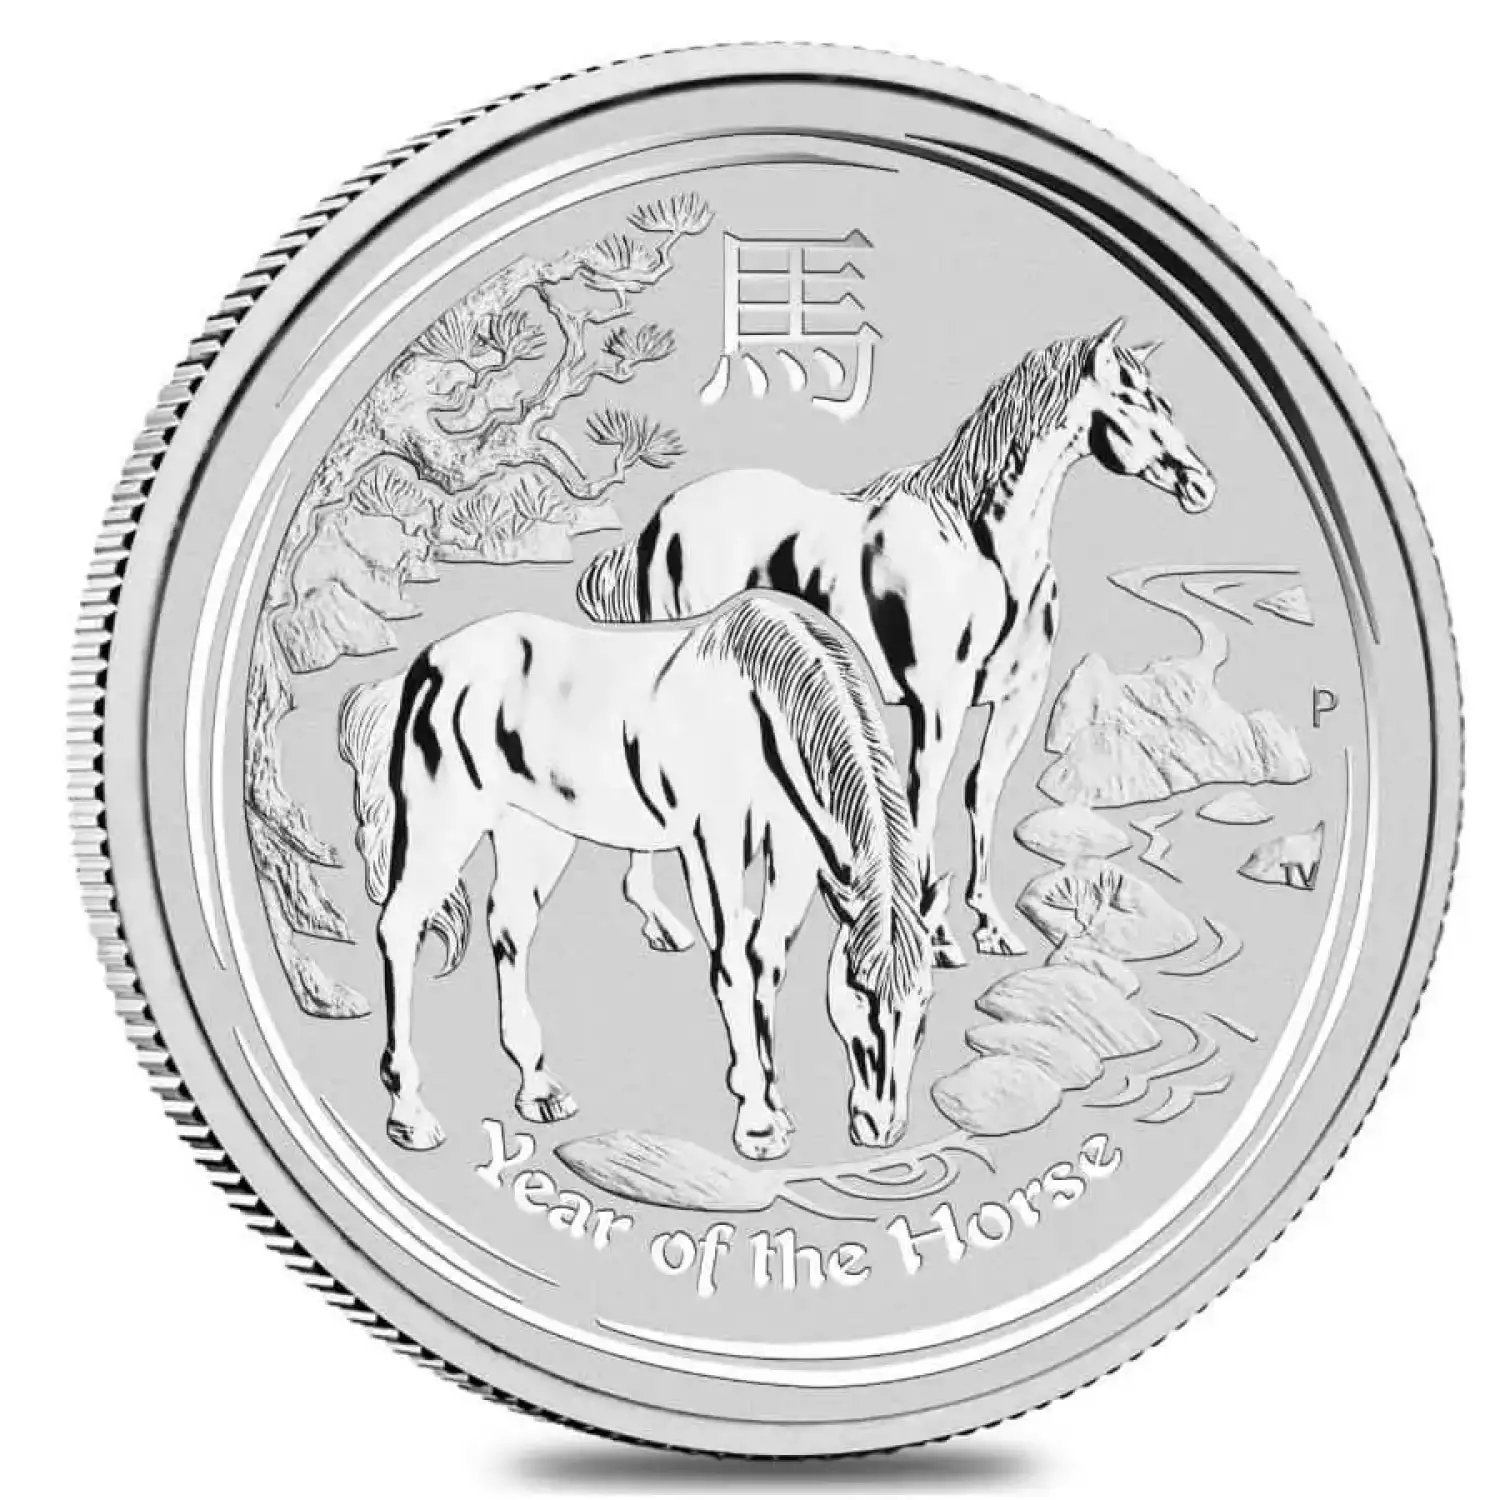 2014 1 oz Australian Perth Mint Silver Lunar II: Year of the Horse